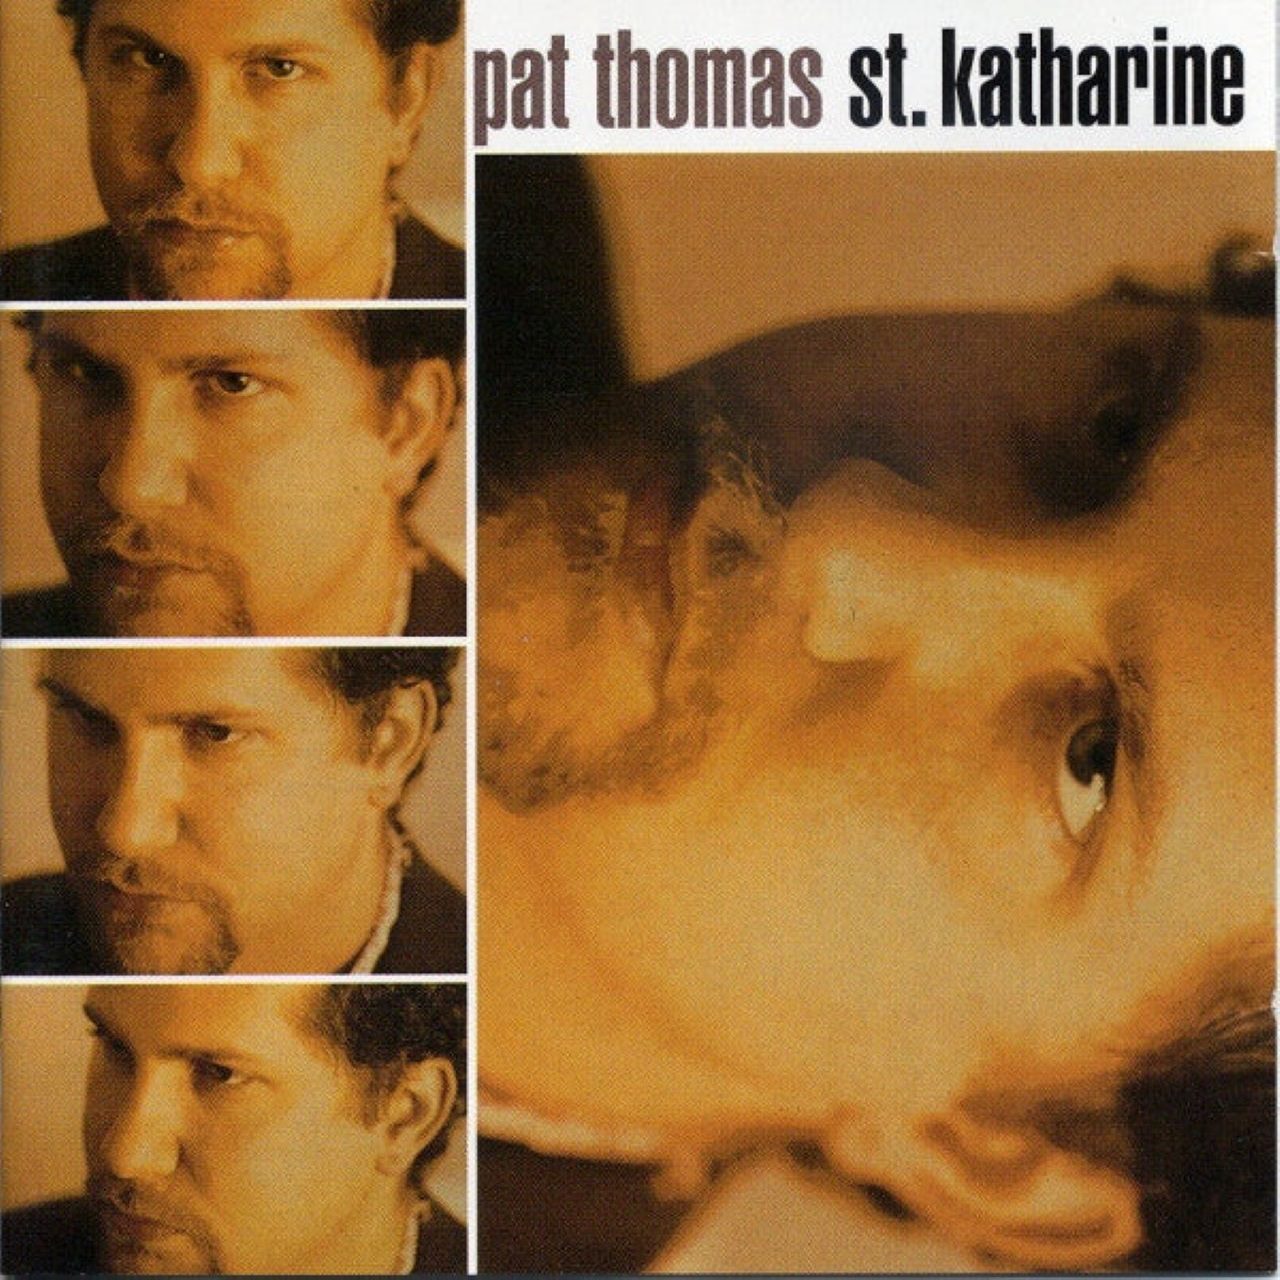 Pat Thomas – St. Katharine cover album